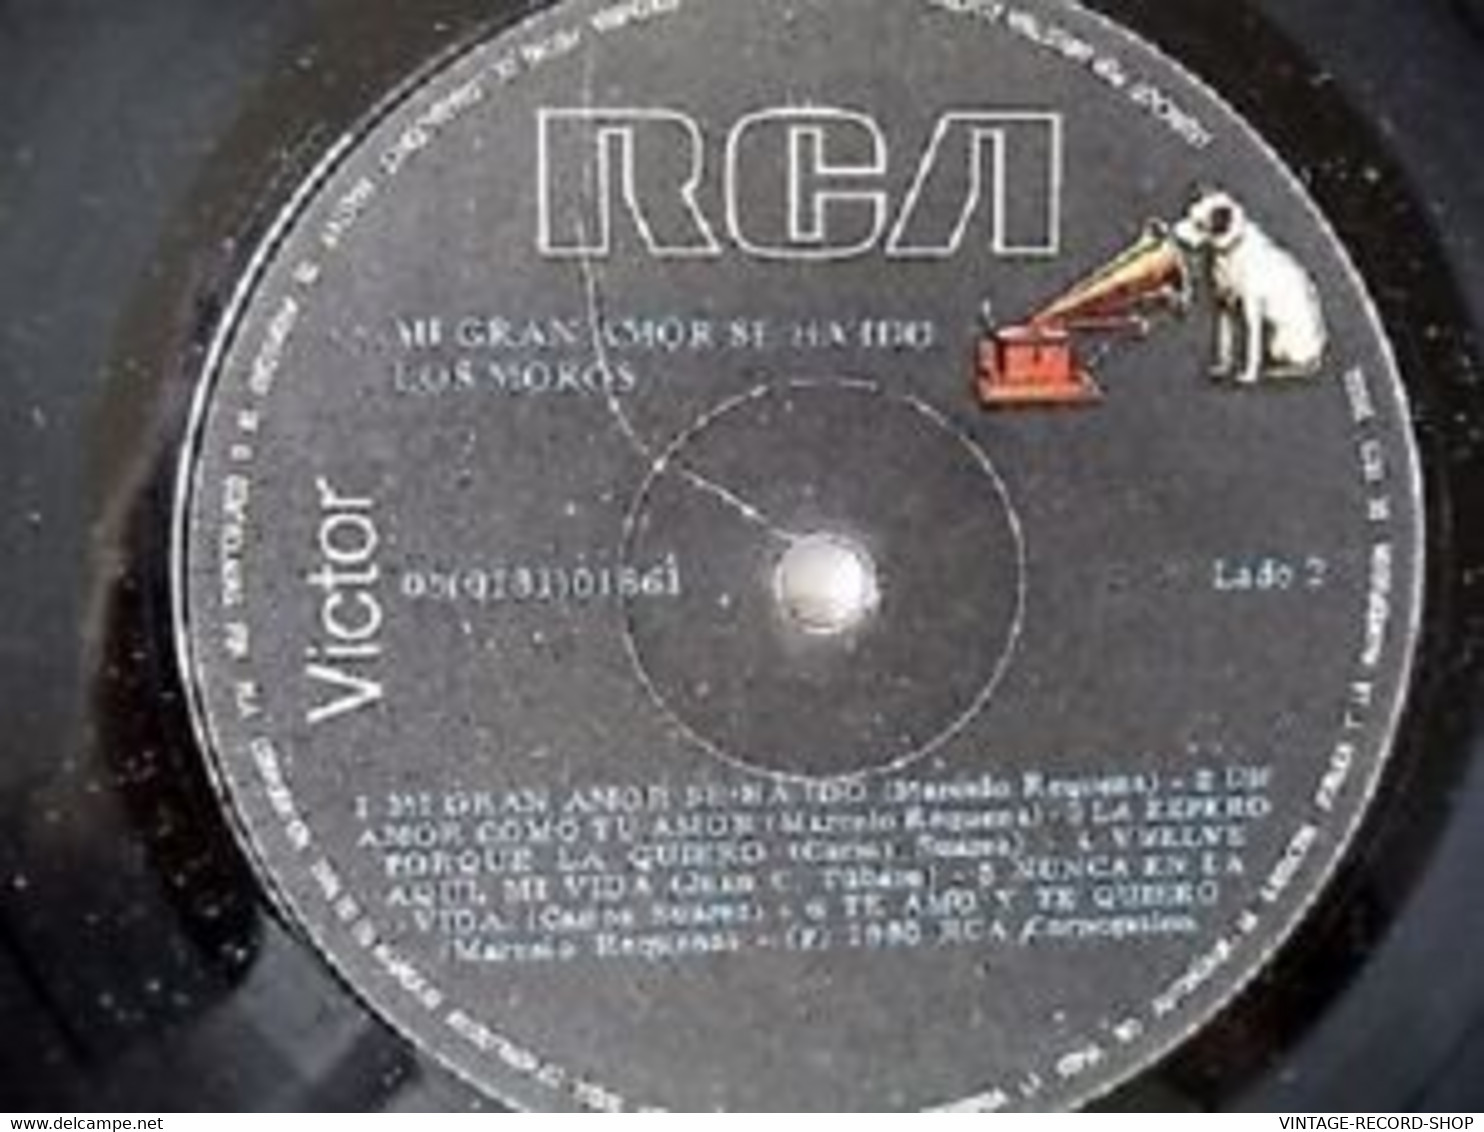 LOS MOROS-MI GRAN AMOR SE HA IDO -HOY TENGO GANAS- RCA- COLOMBIA PRESS/1981LATIN MUSIC - World Music